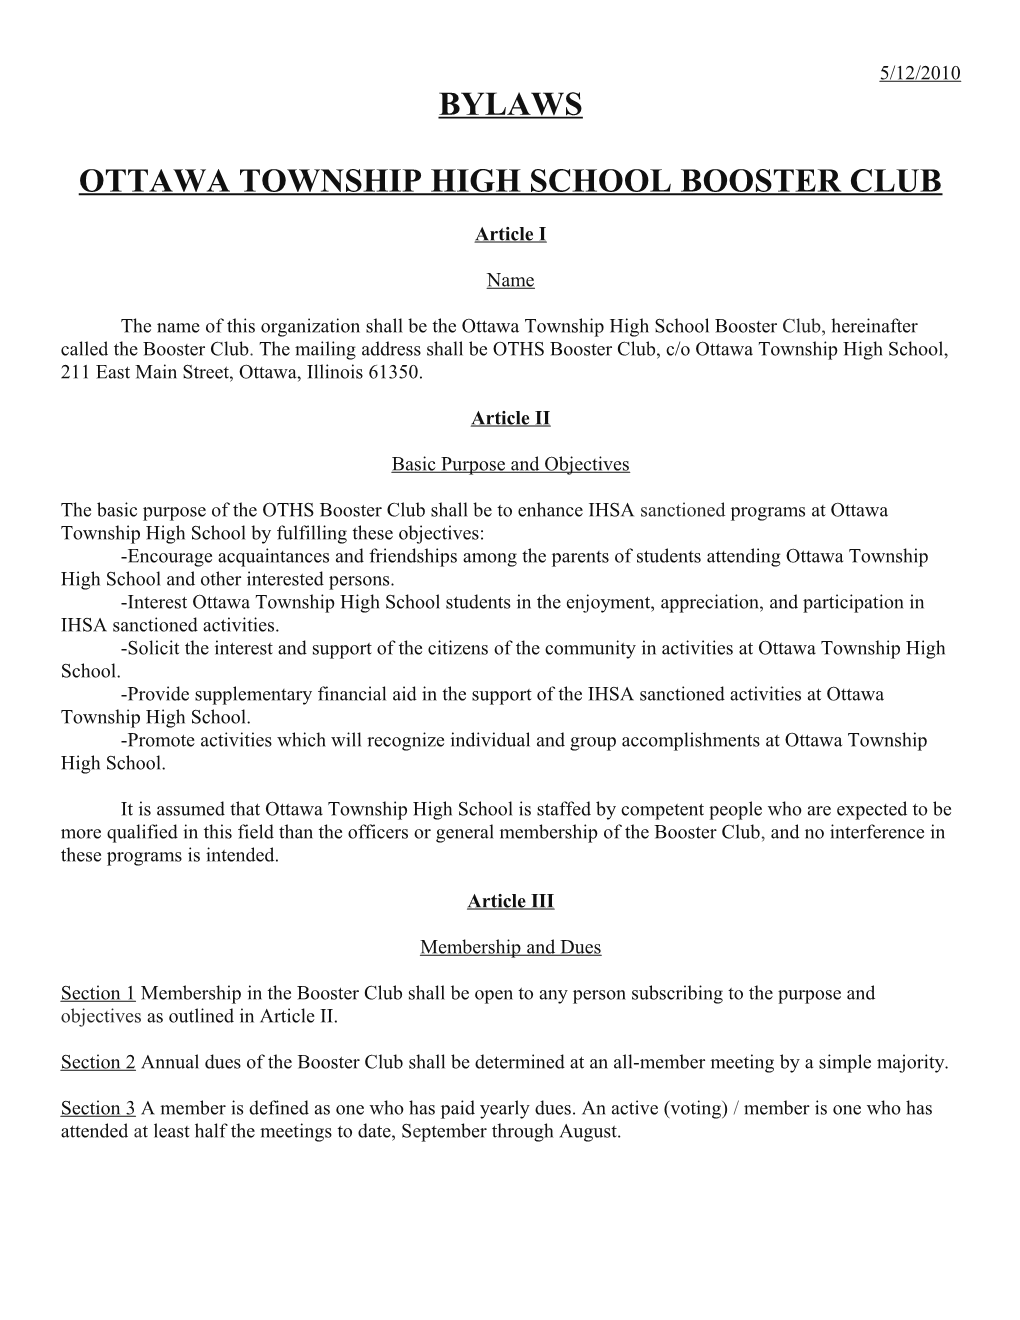 Ottawa Township High School Booster Club